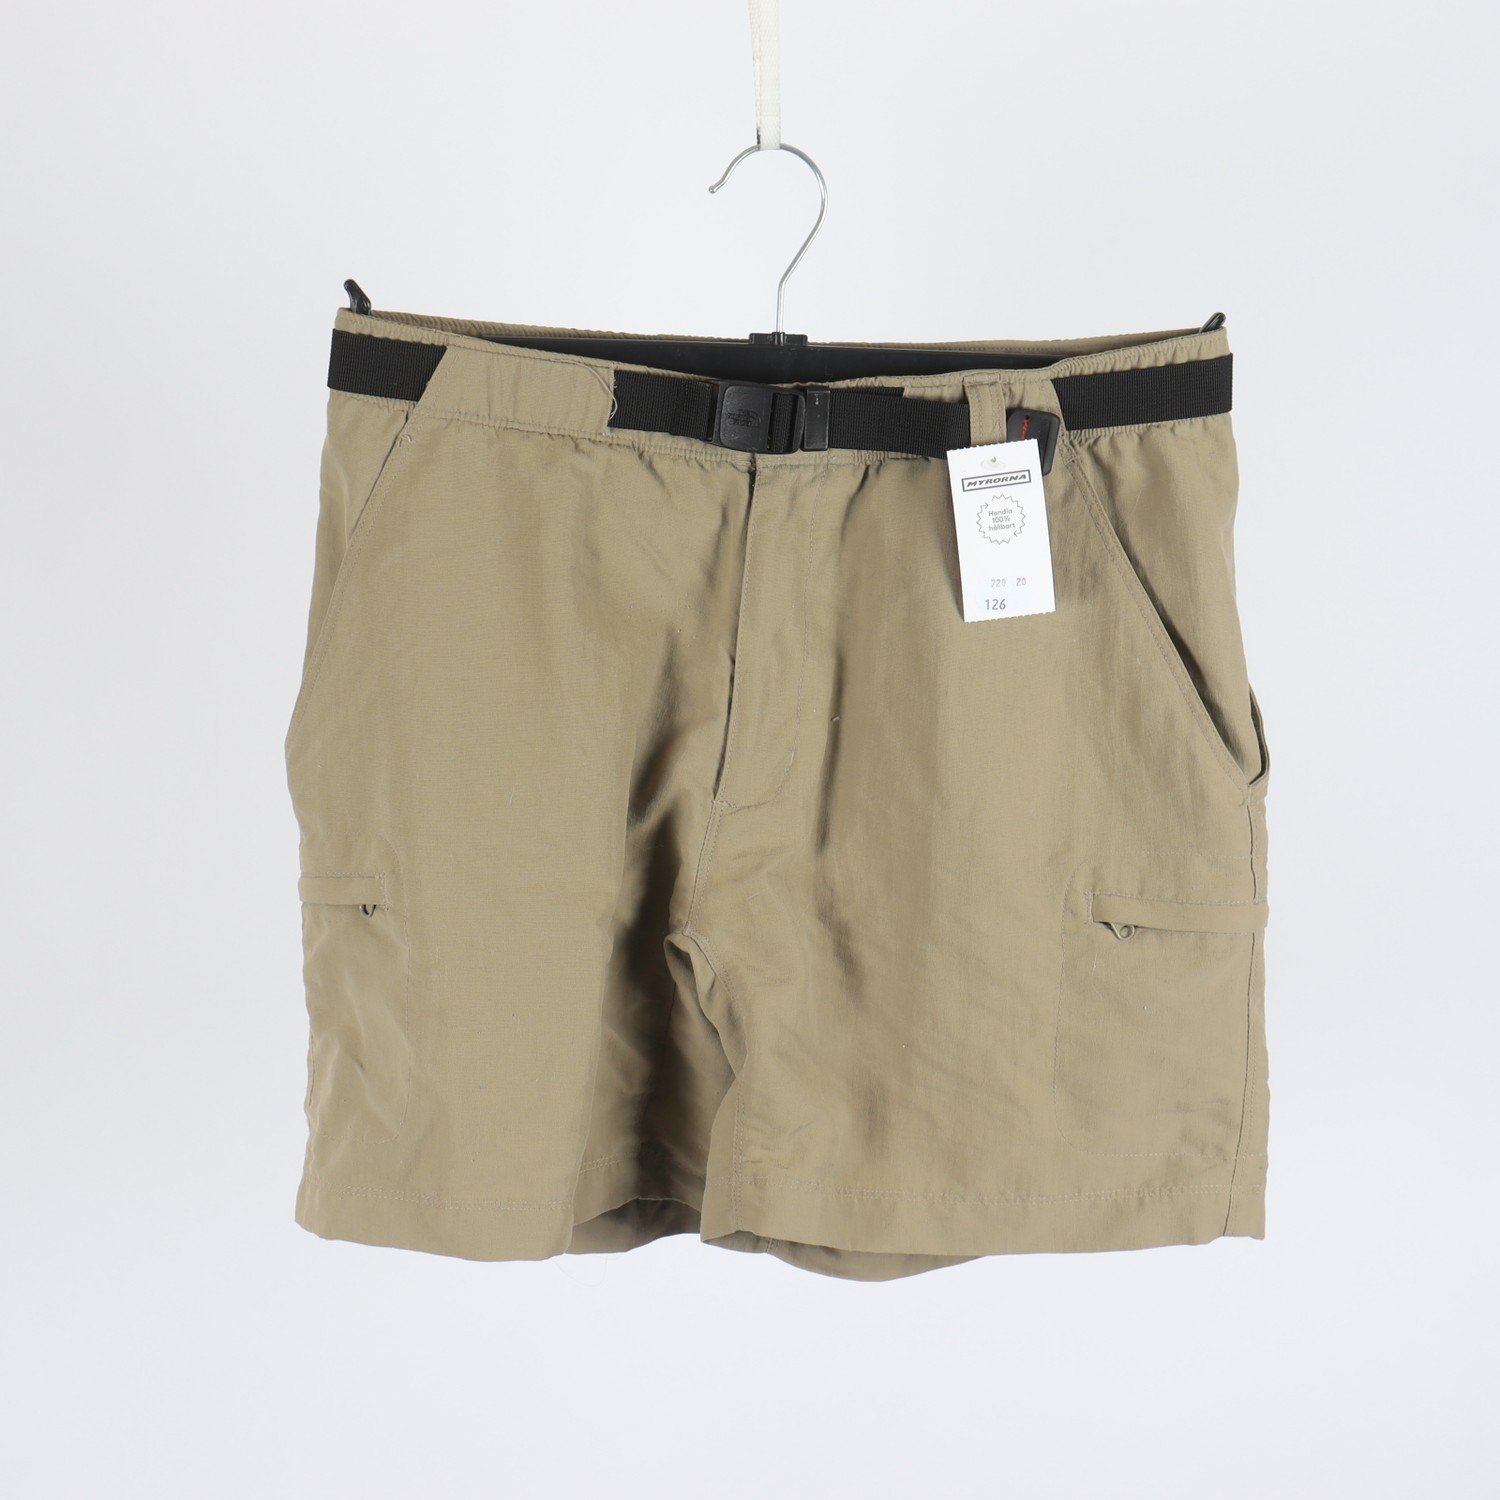 Shorts, The North Face, kahkigrön, stl. M